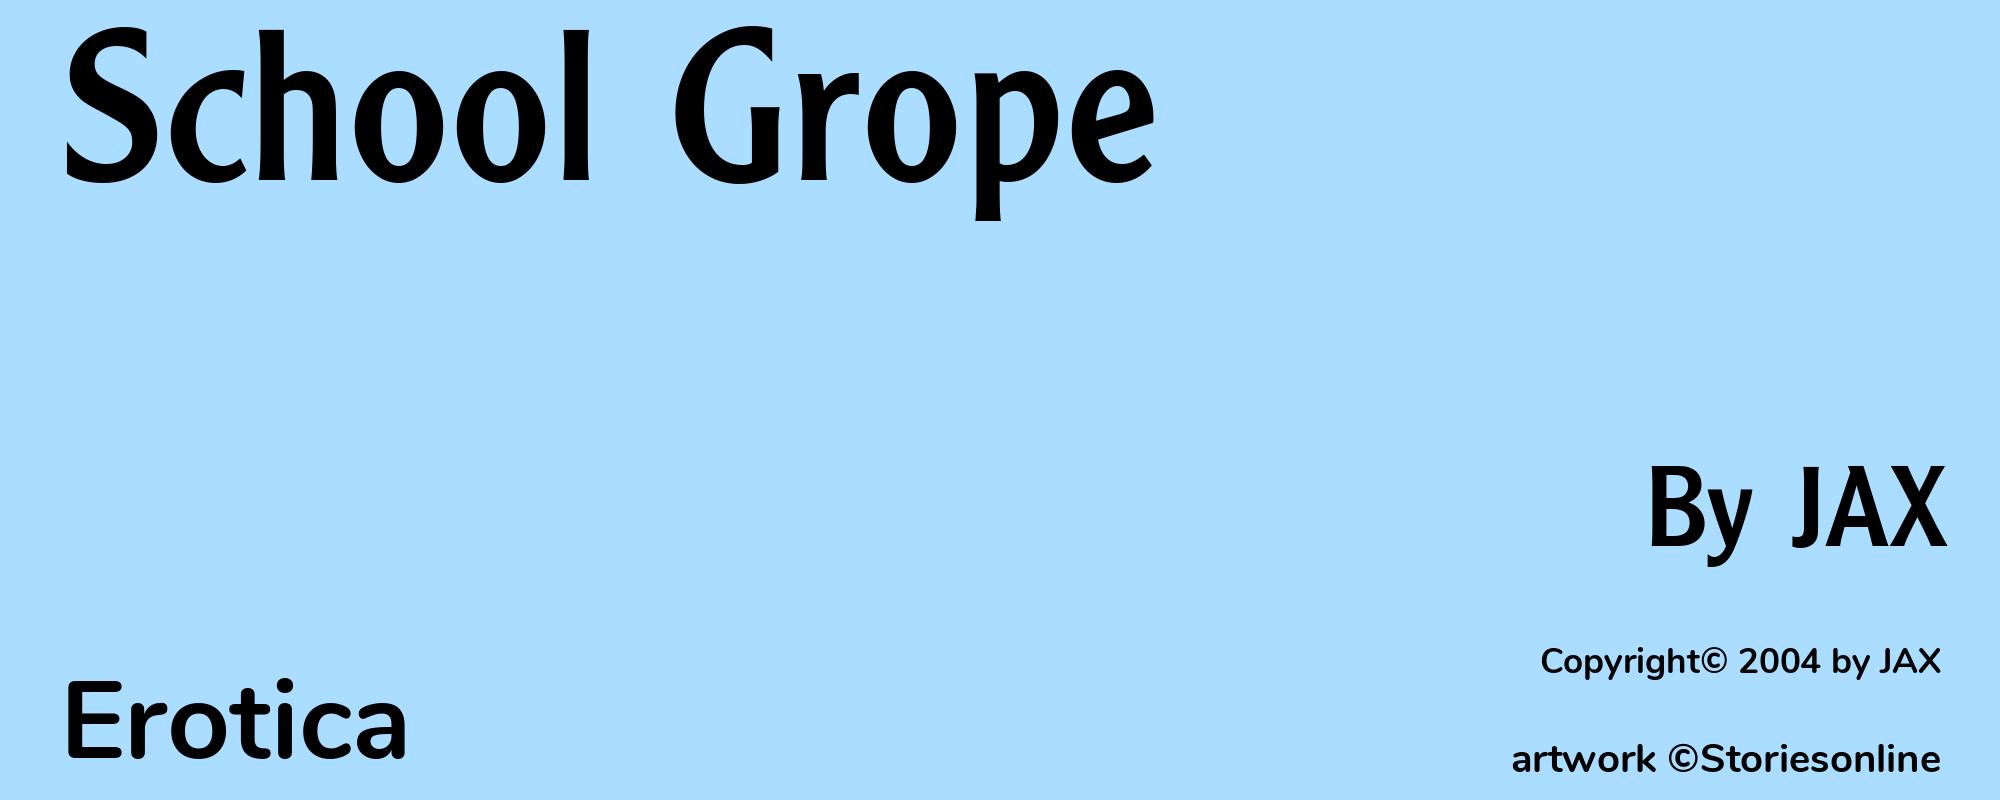 School Grope - Cover